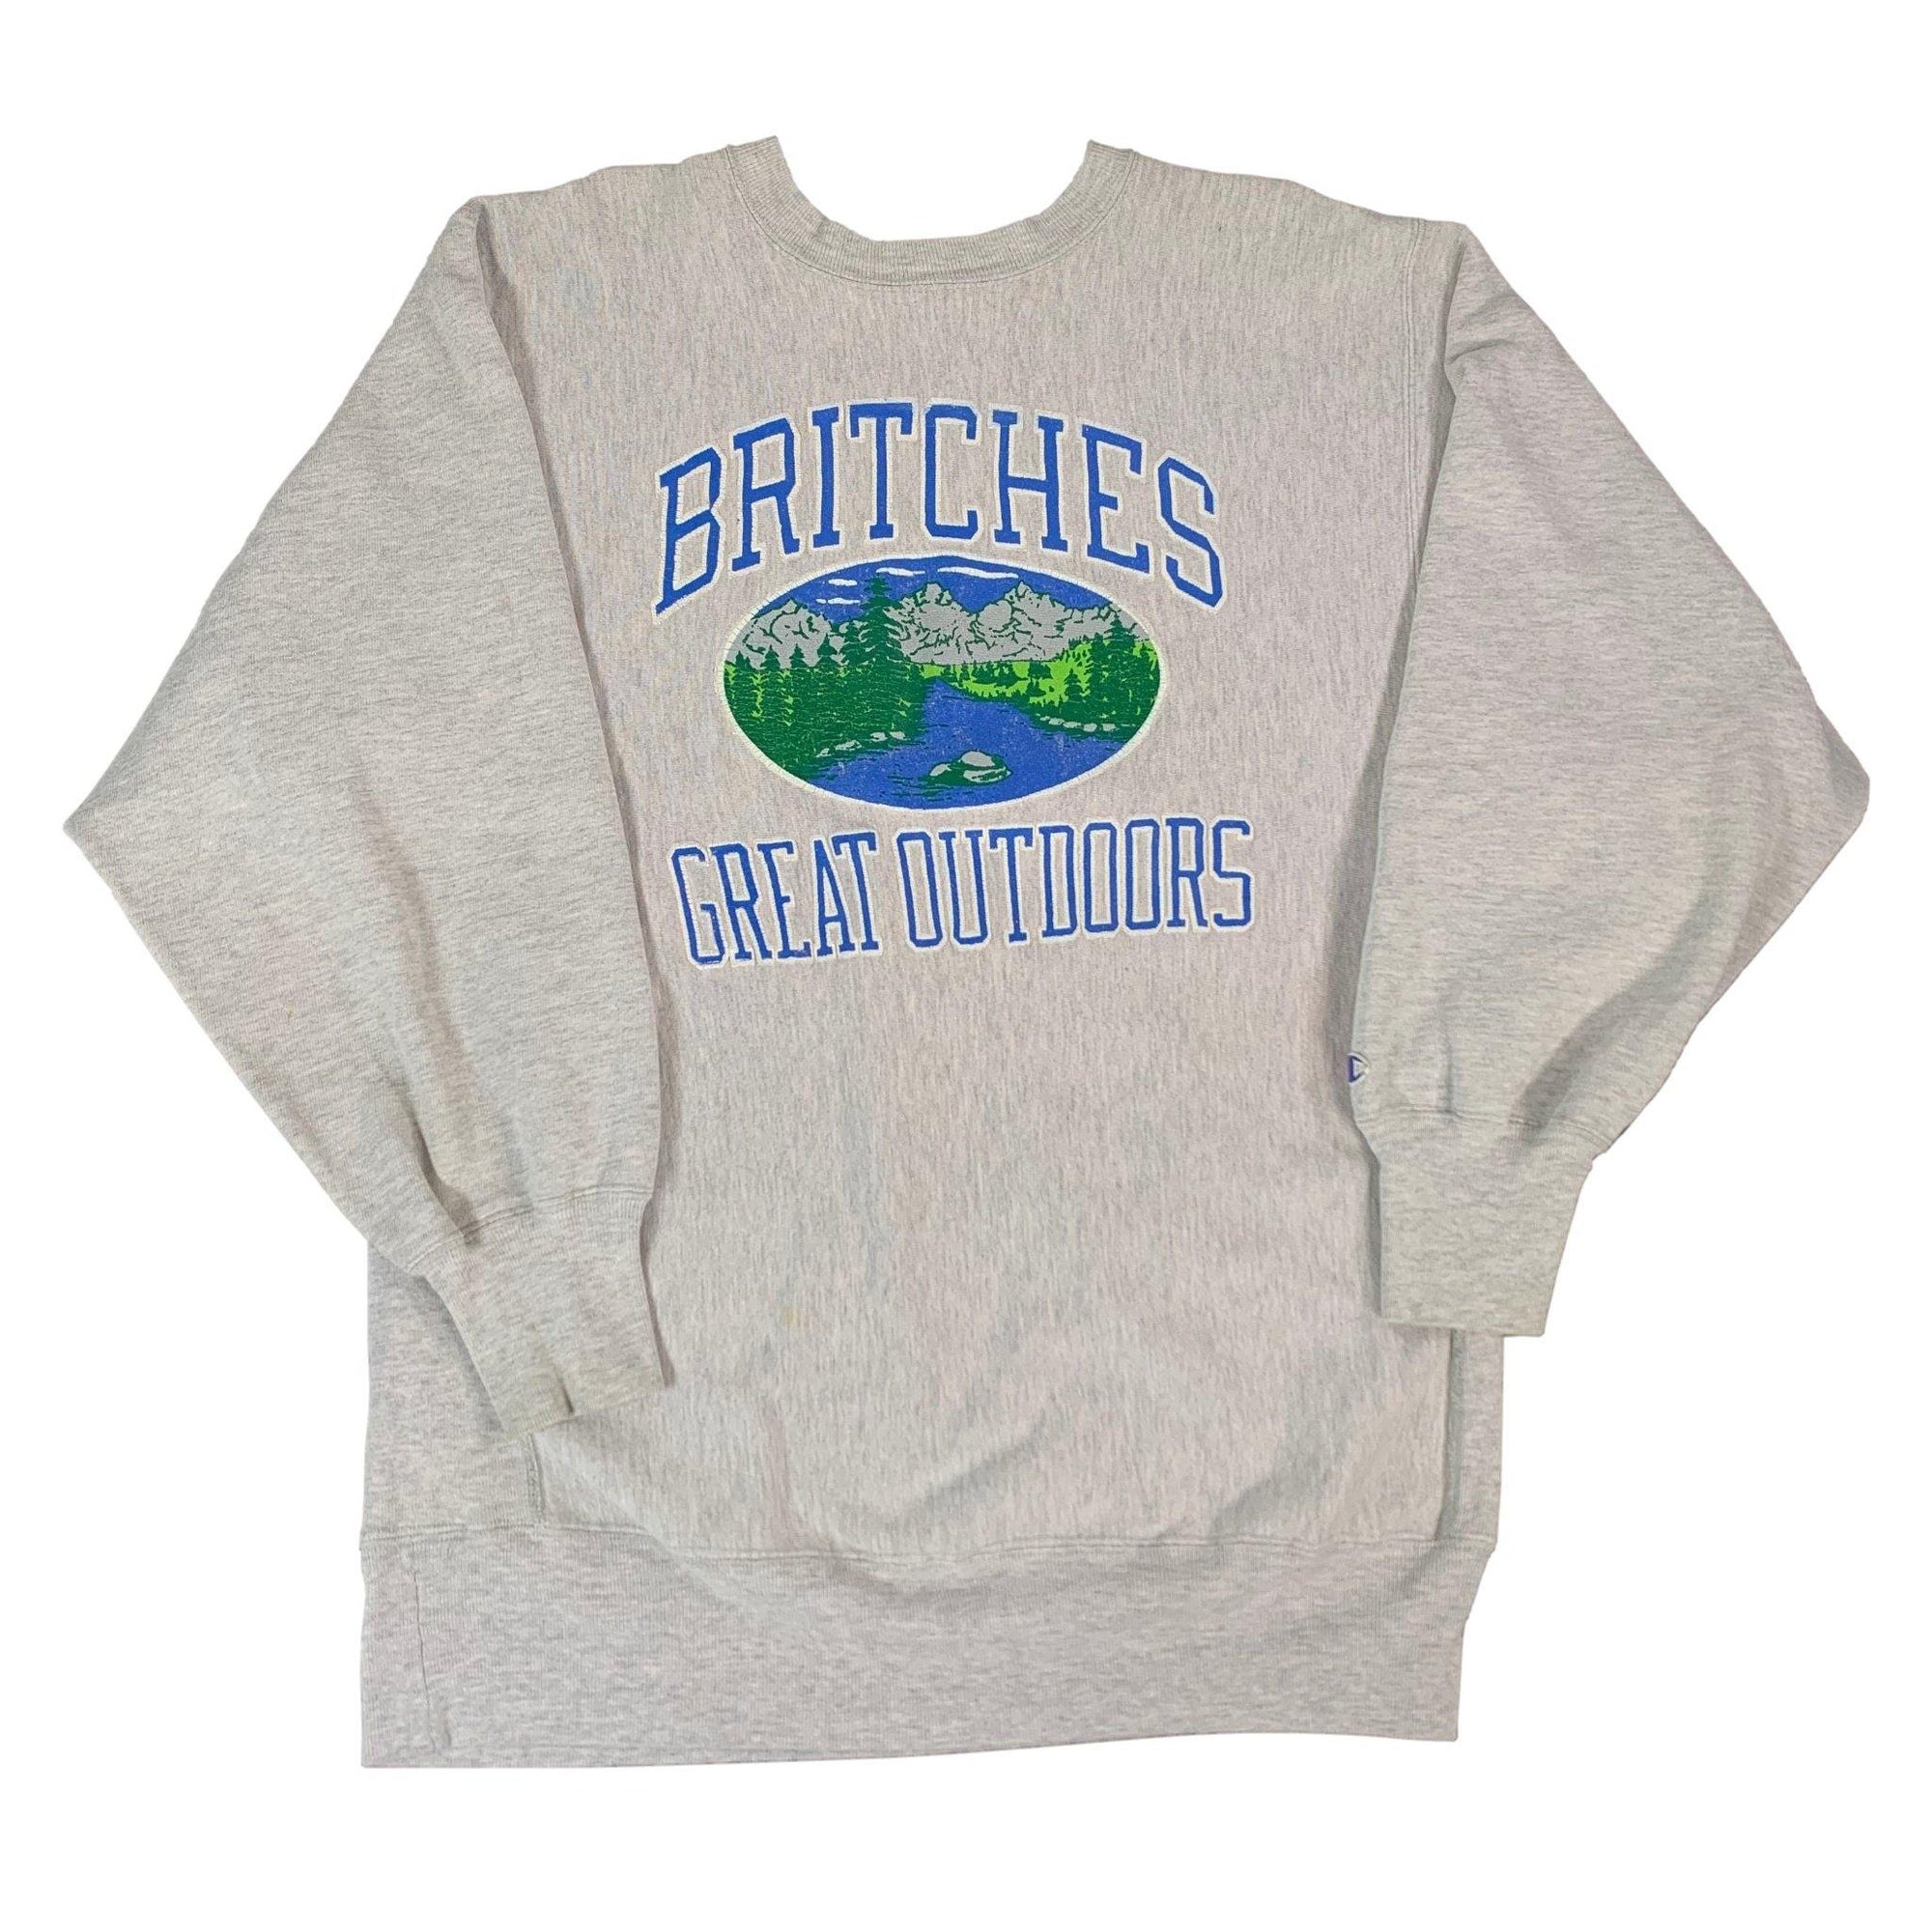 Vintage Champion Reverse Weave "Britches Great Outdoors" Crewneck Sweatshirt - jointcustodydc